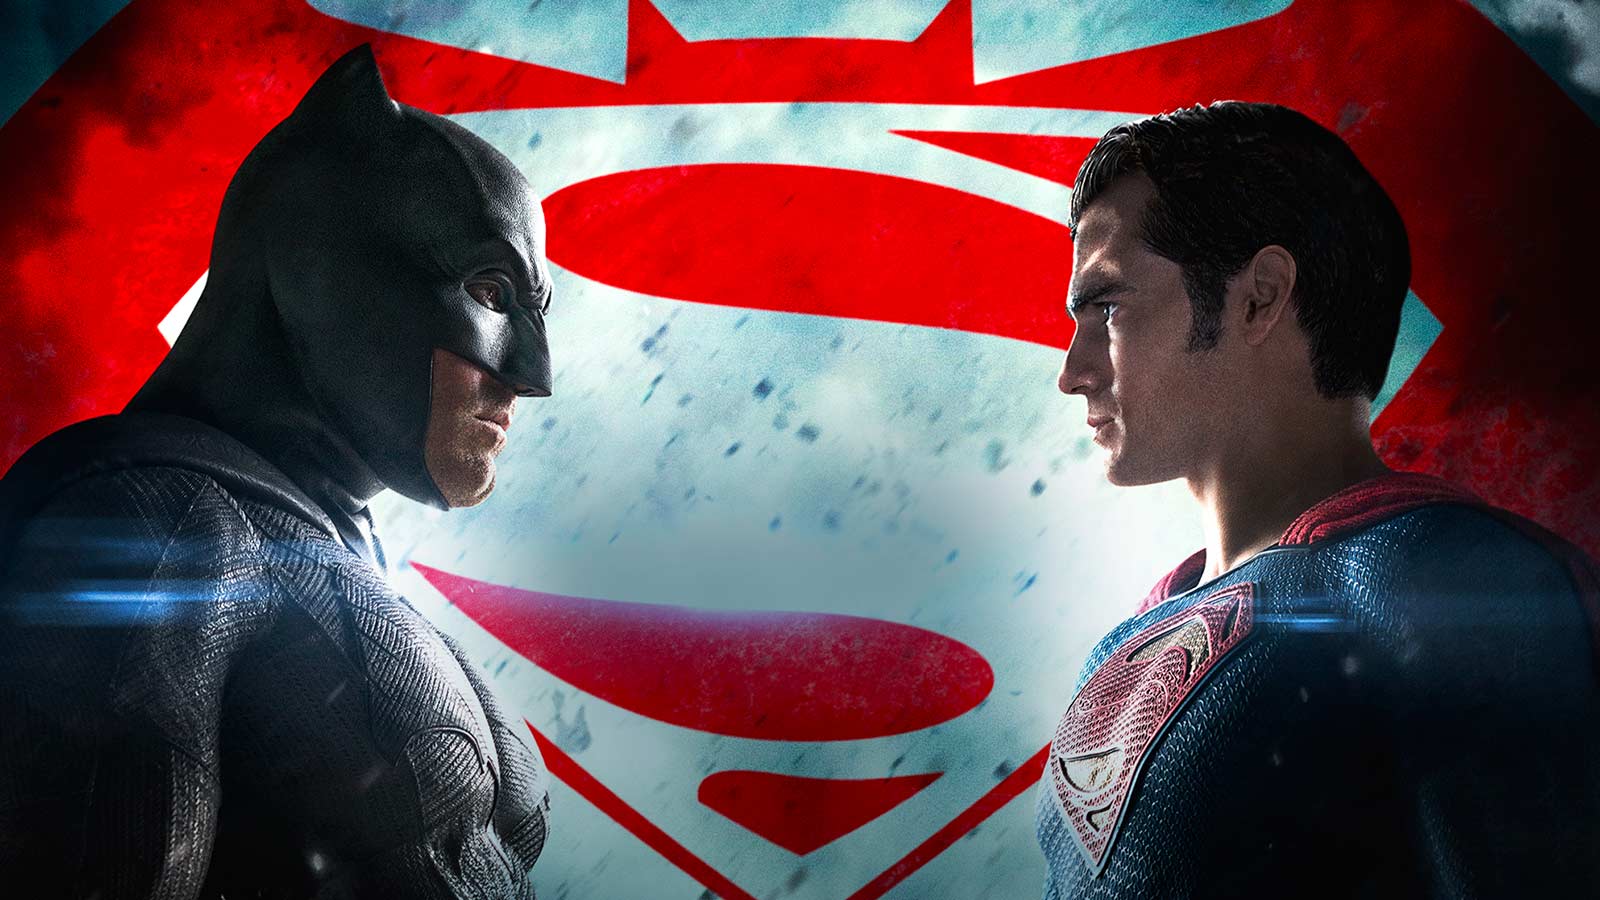 superman vs batman movie logo